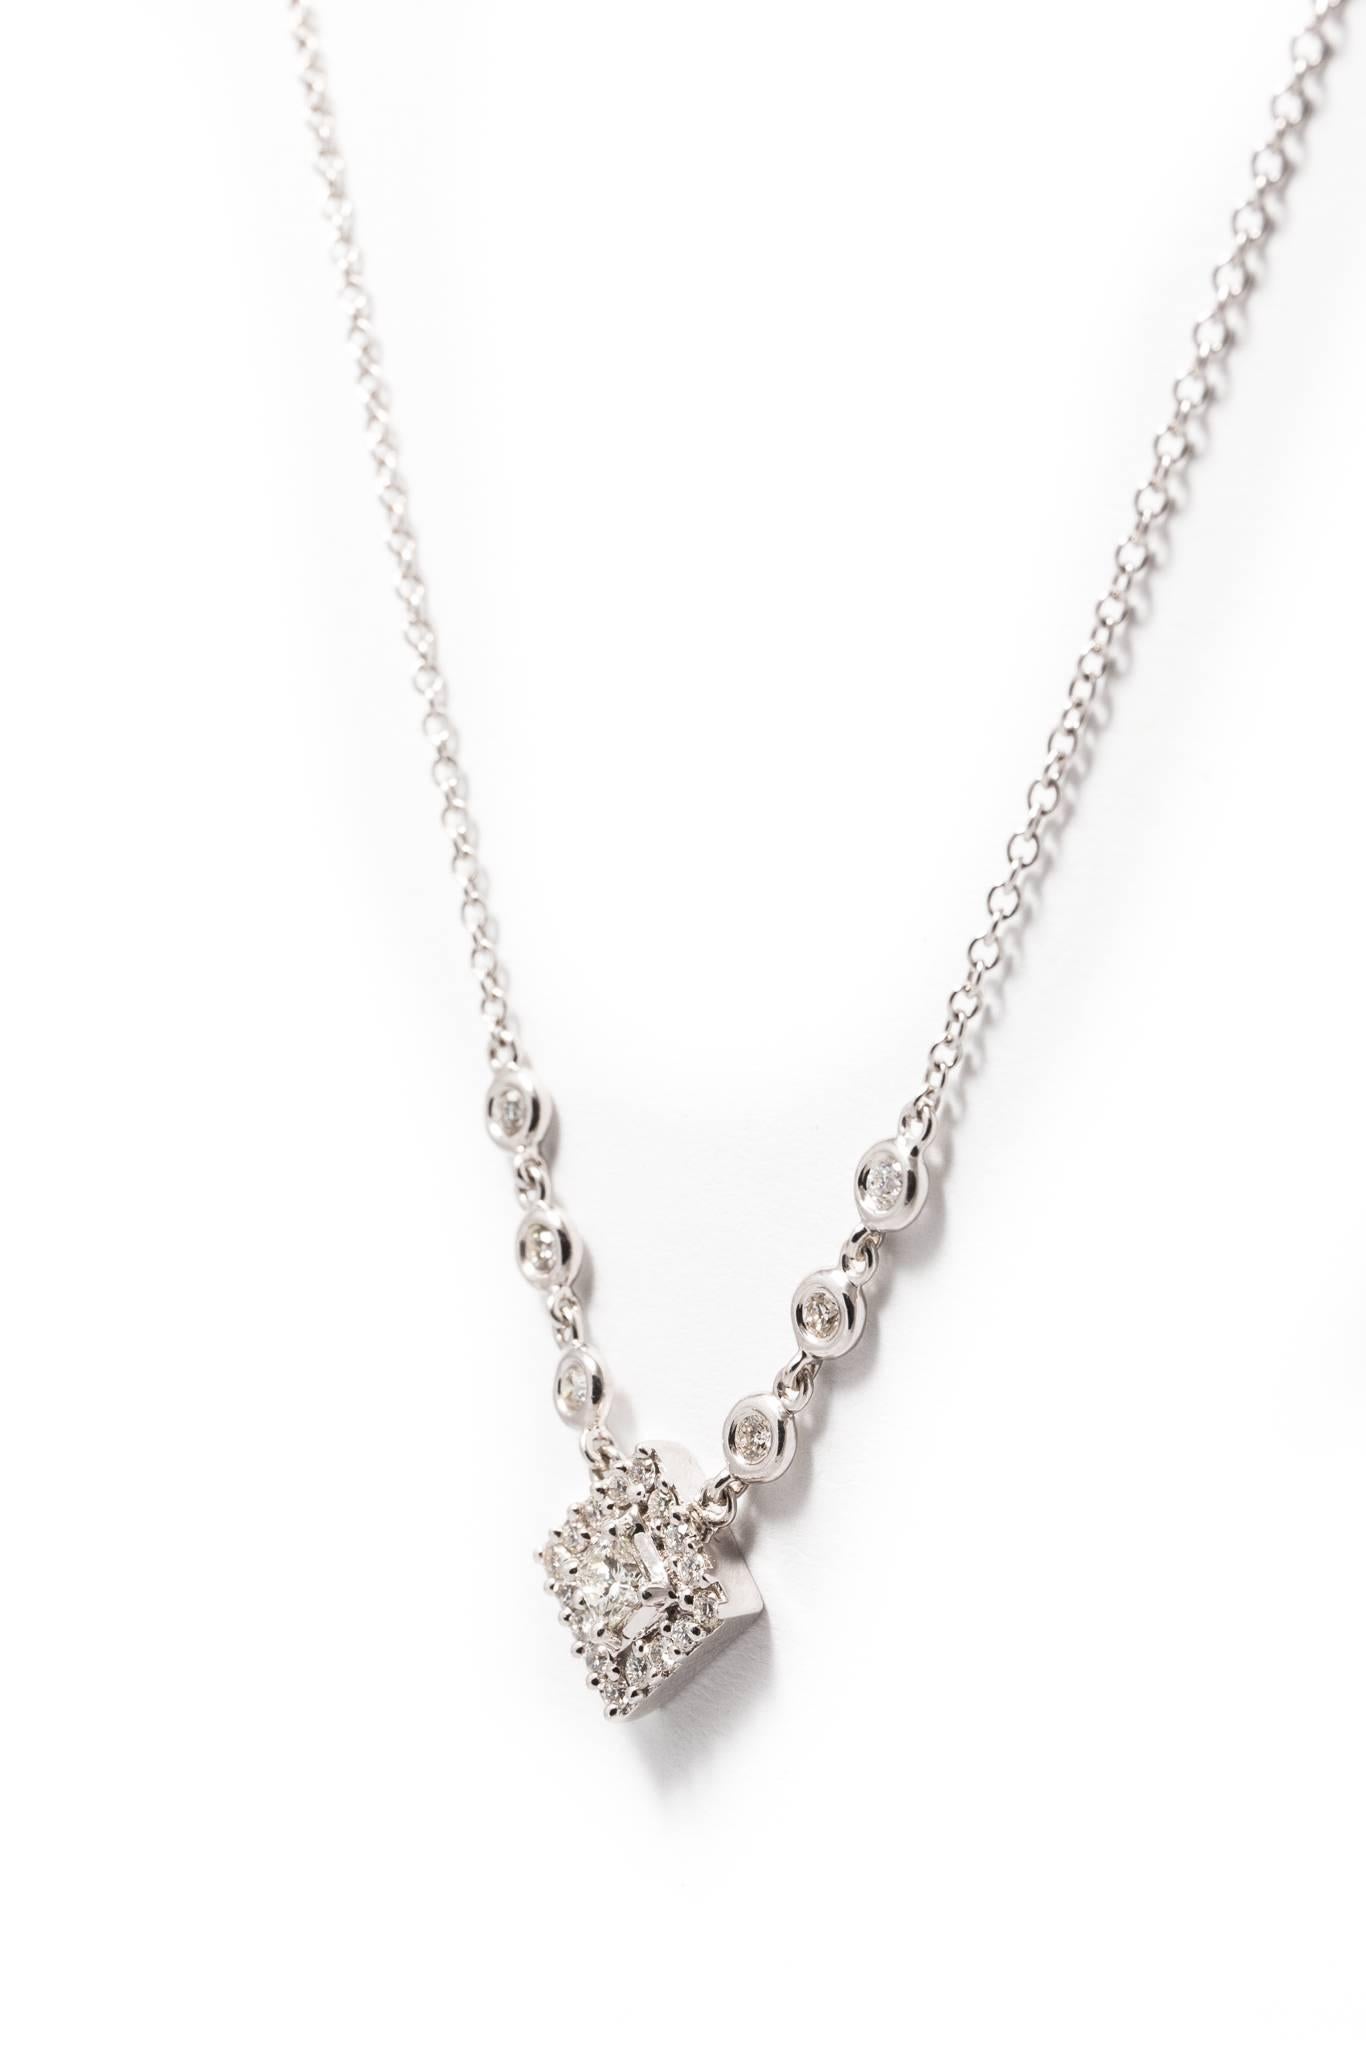 Women's Chic Contemporary Diamond White Gold Pendant Necklace  